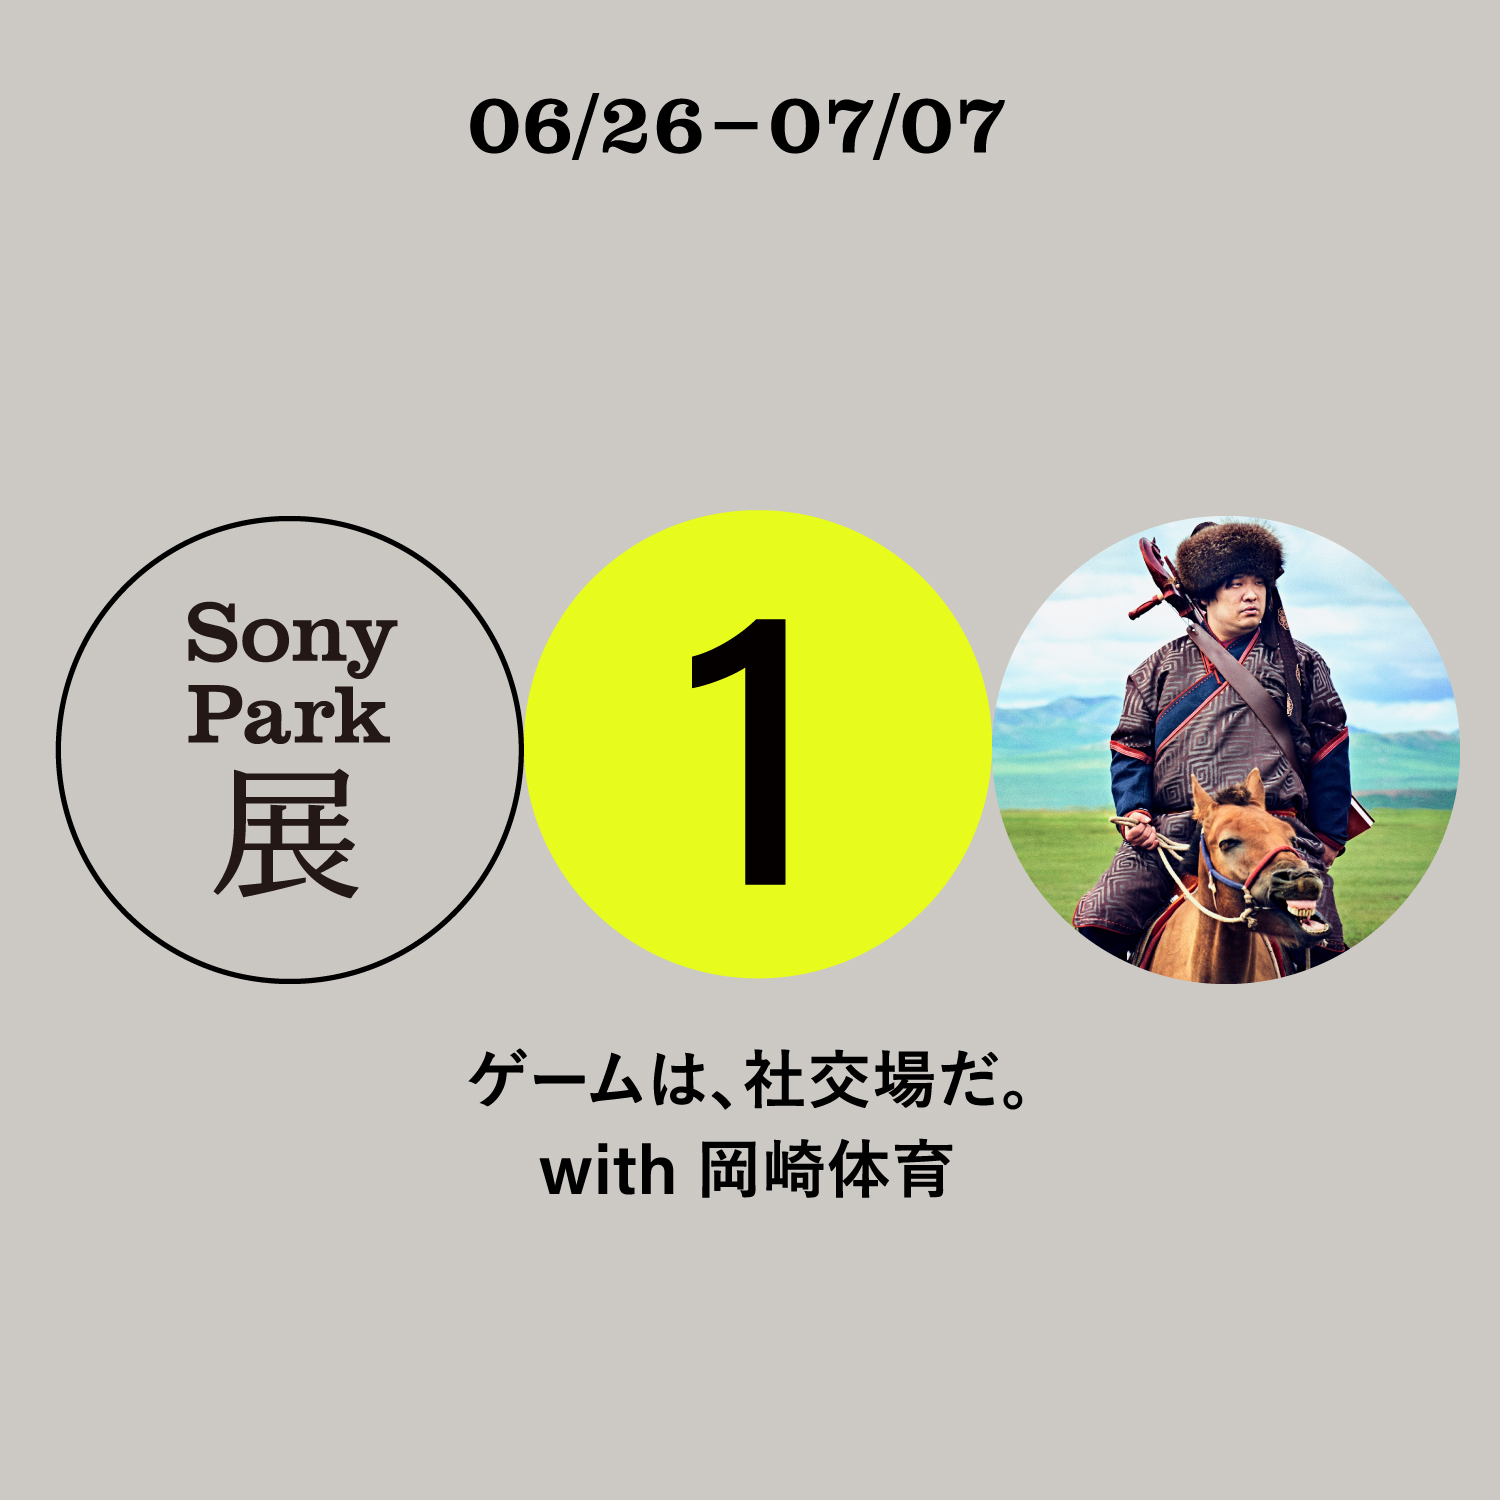 Sony Park Exhibition ①GAME with okazakitaiiku